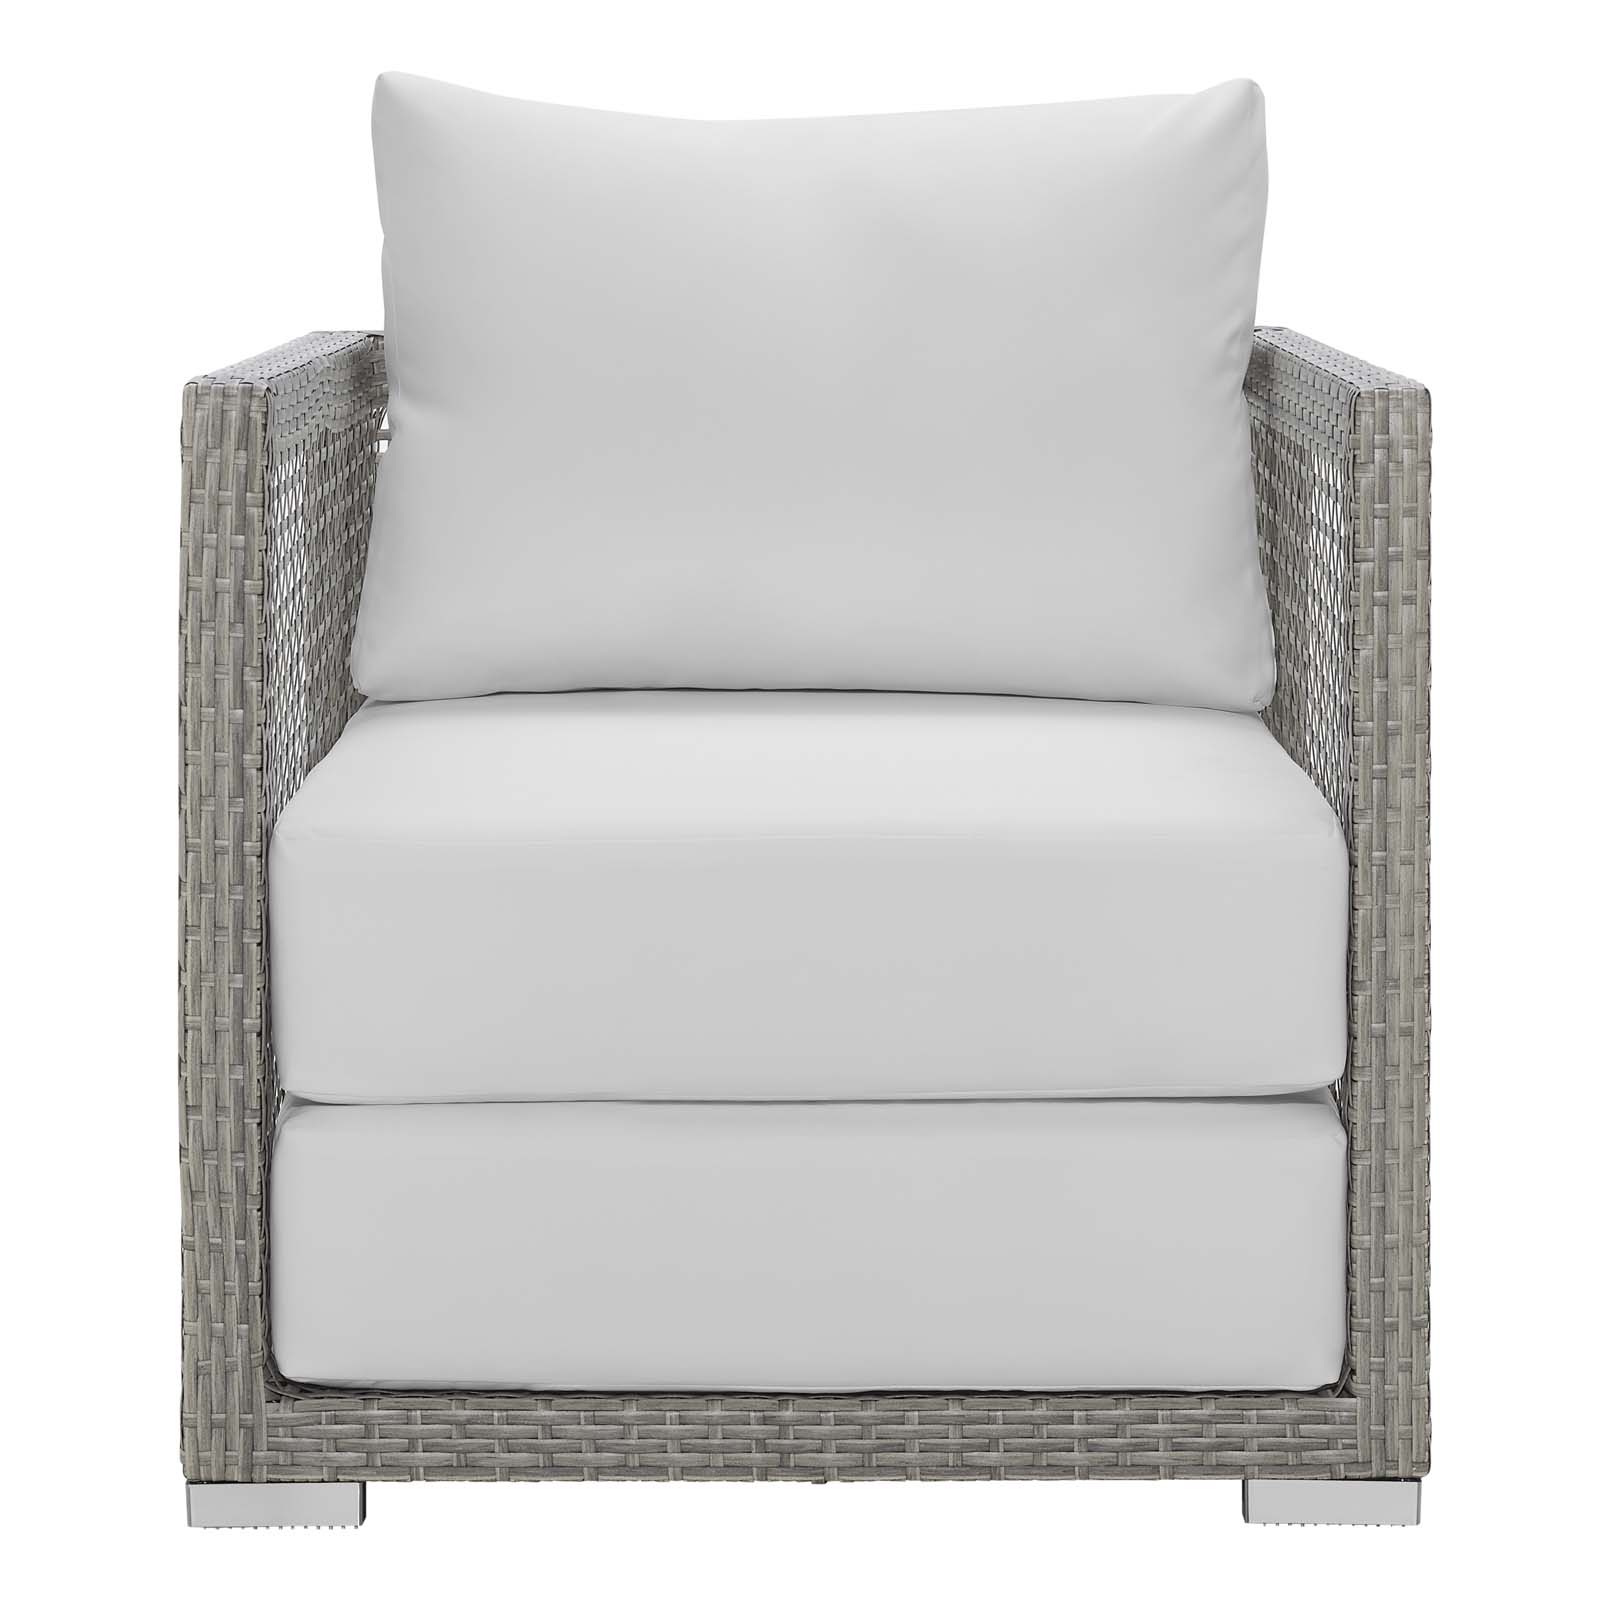 Modern Contemporary Urban Design Outdoor Patio Balcony Garden Furniture Lounge Chair Armchair, Rattan Wicker, Grey Gray White - image 3 of 6